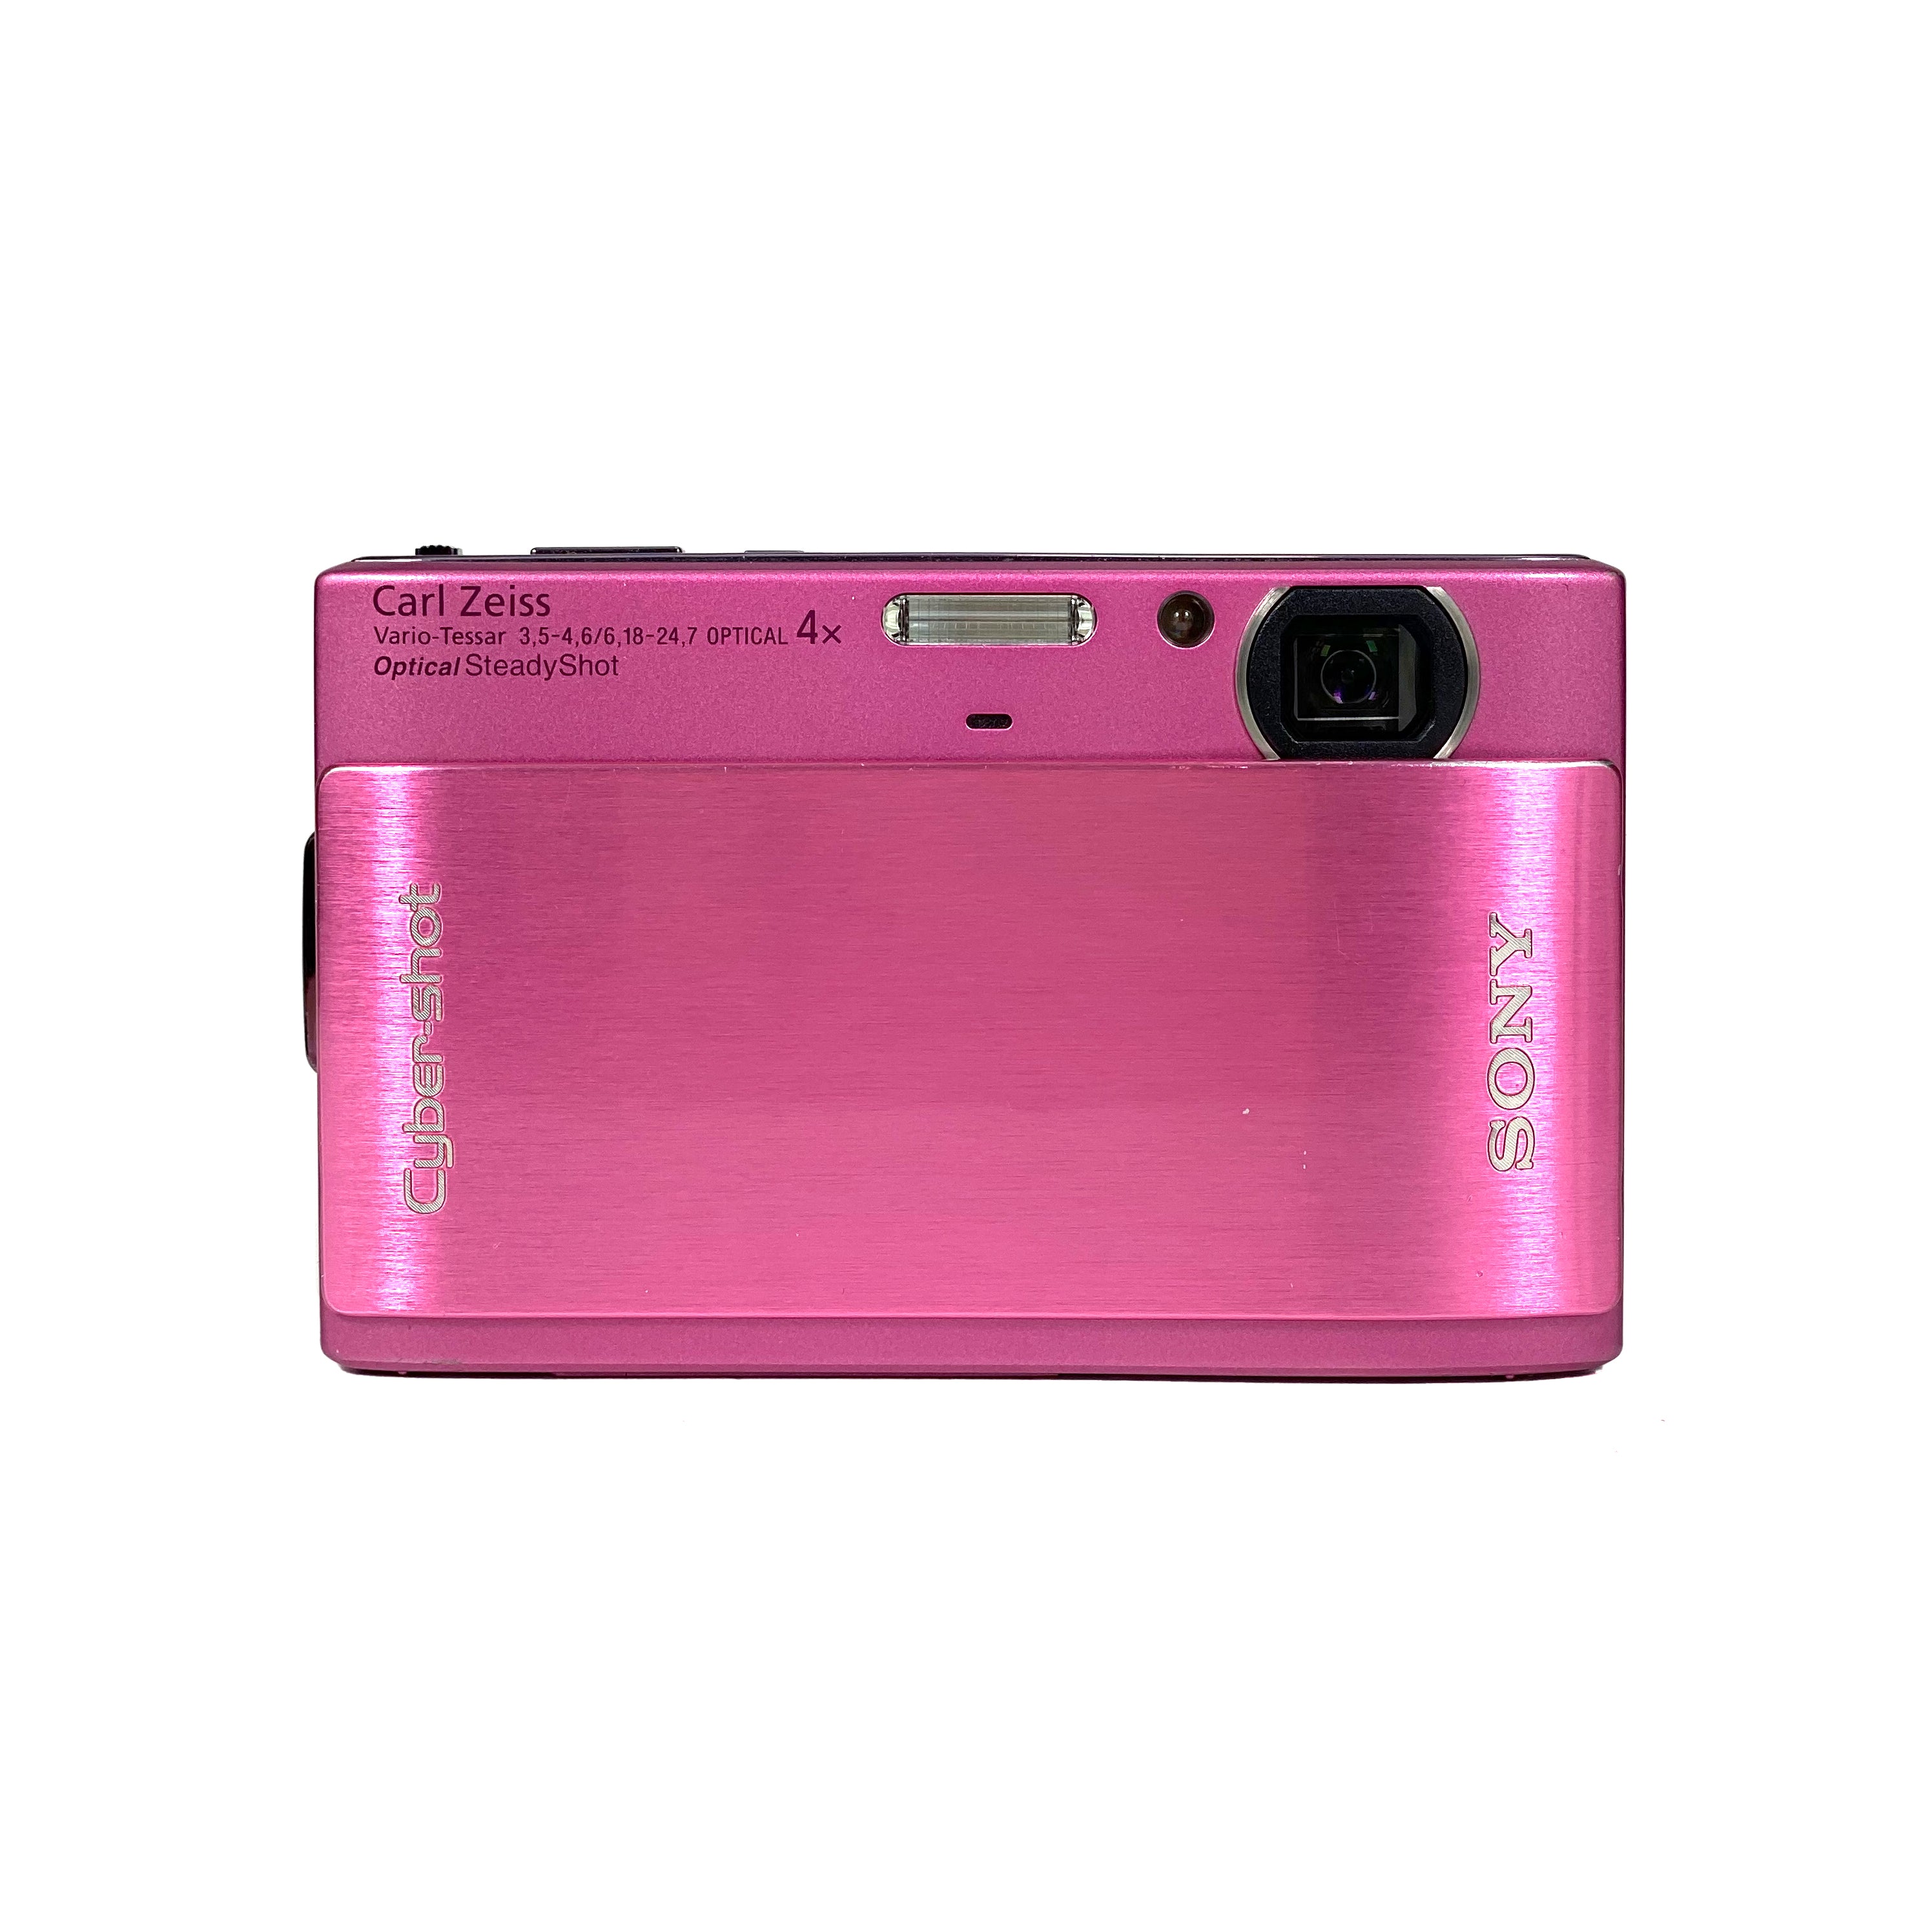 Sony Cybershot DSC-TX1 Digital Compact - Pink – Retro Camera 